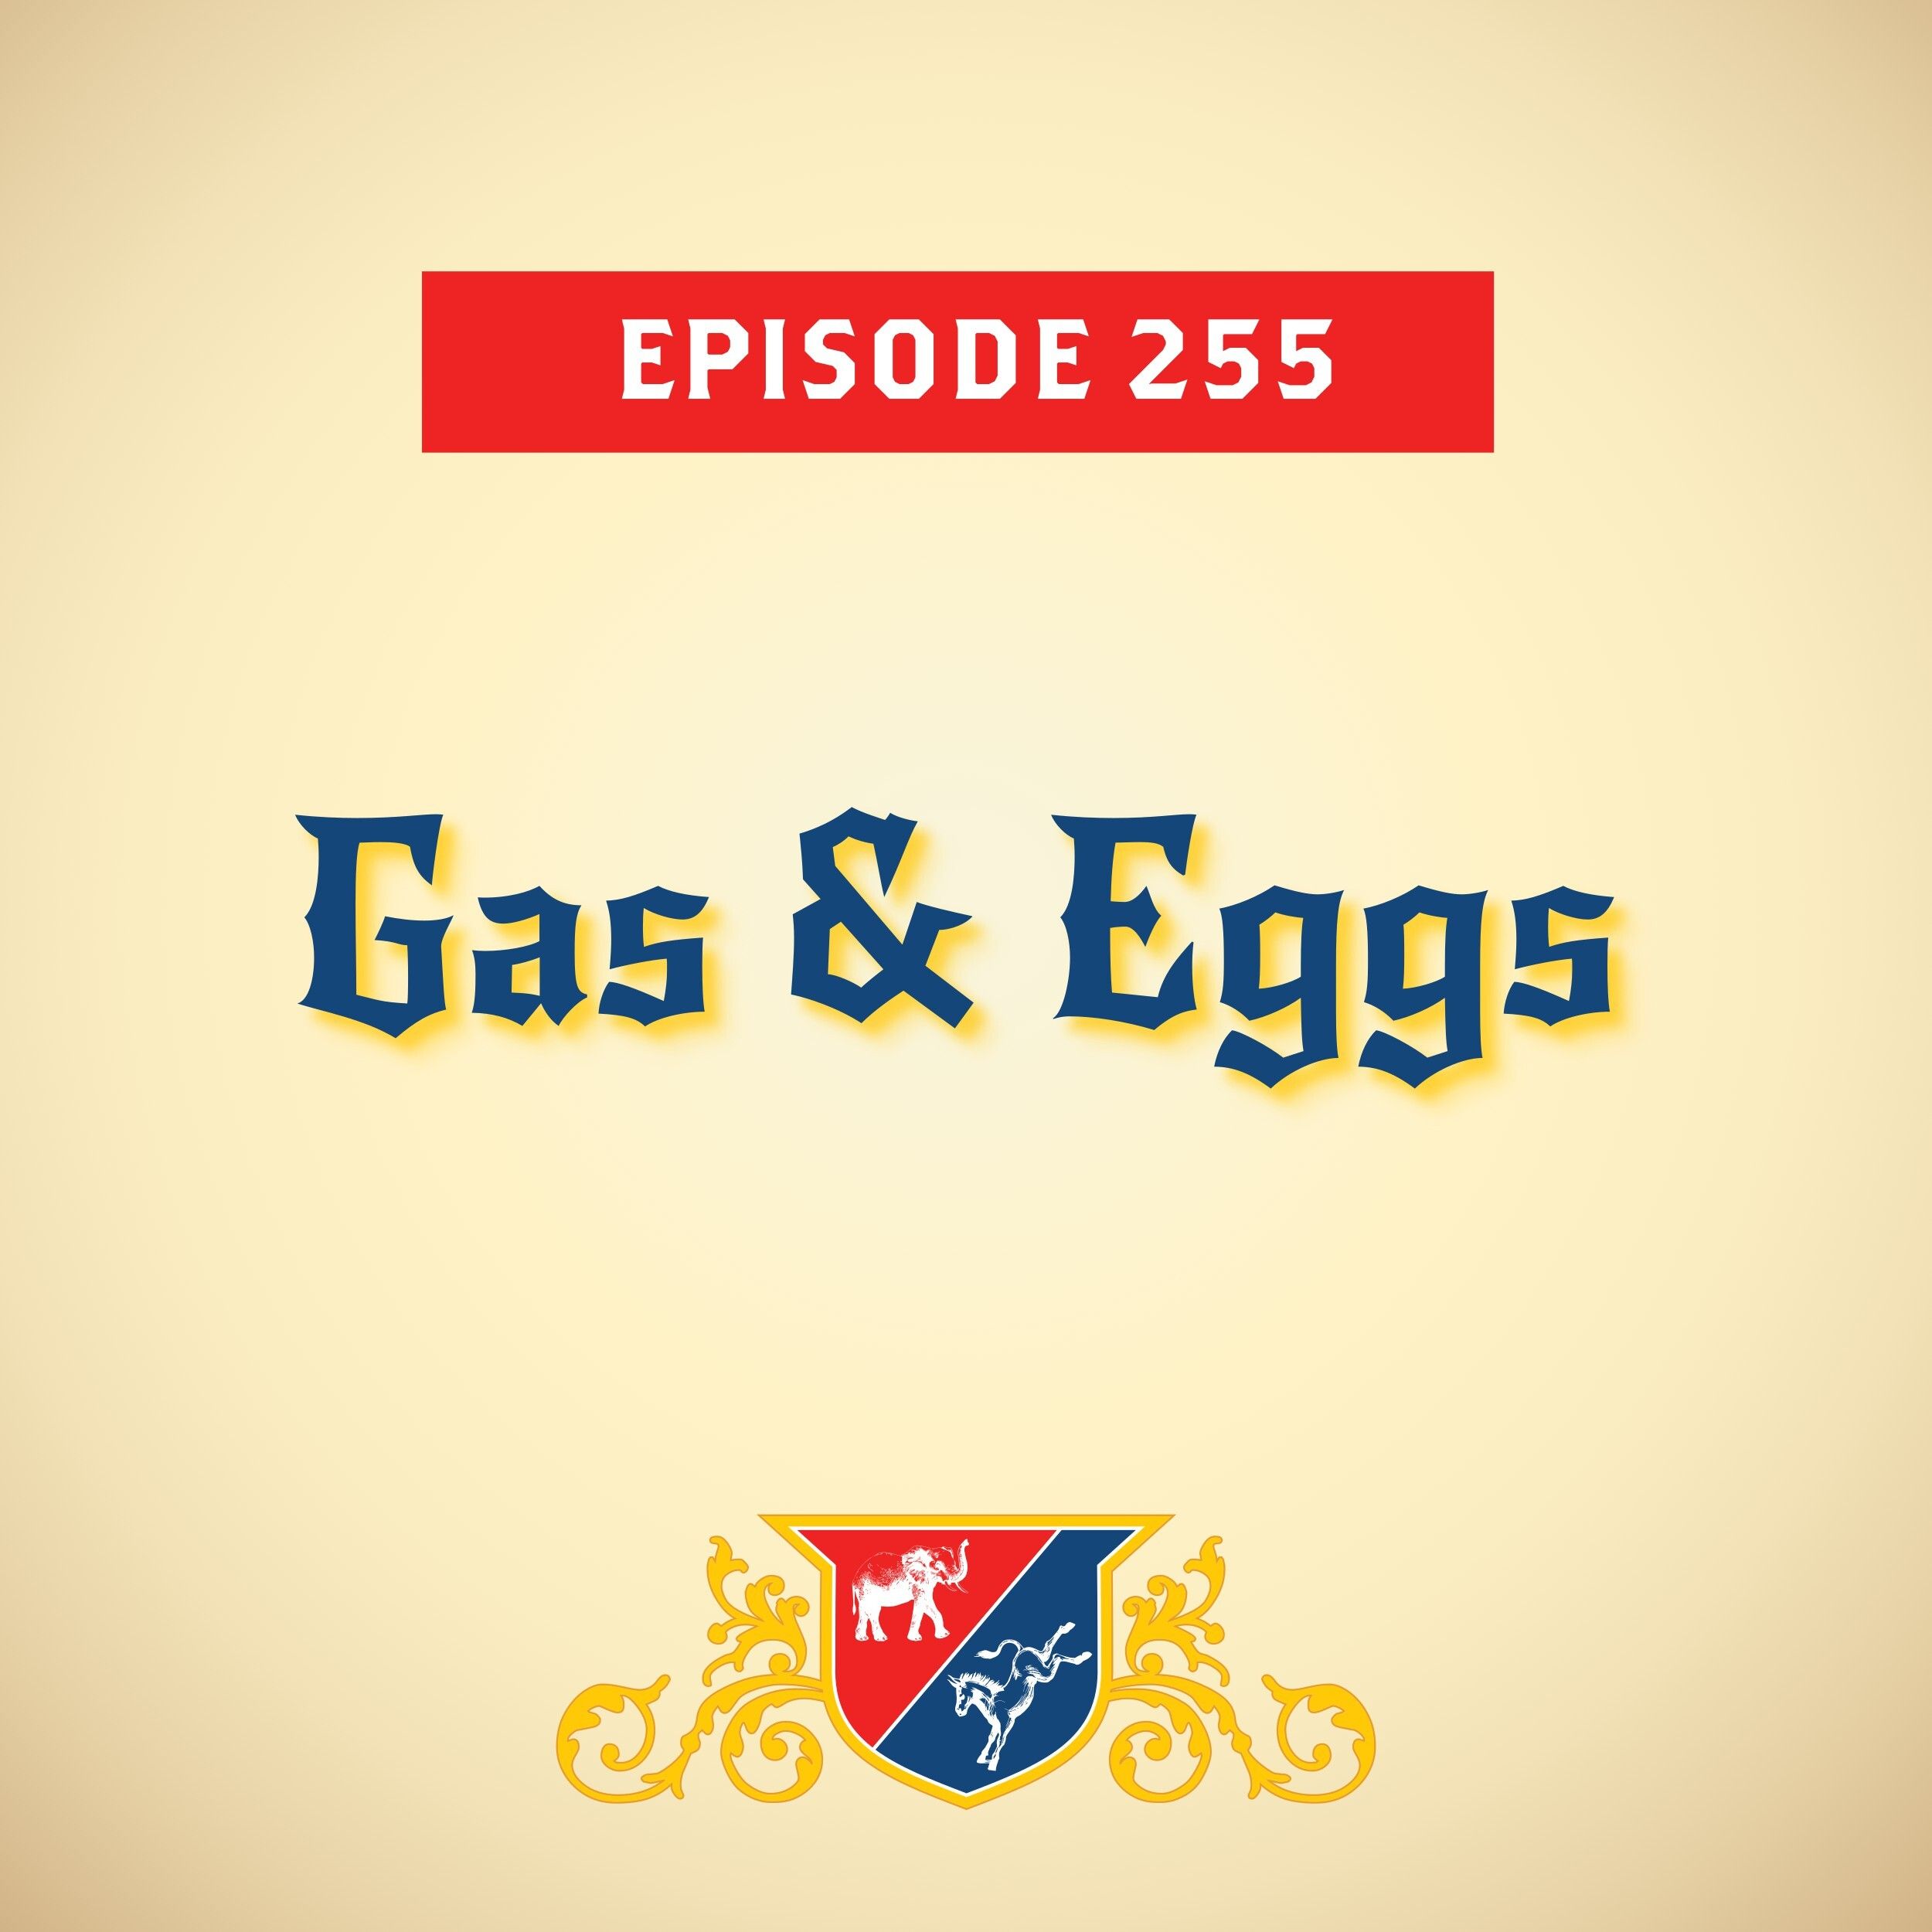 Gas & Eggs (with John Heilemann)